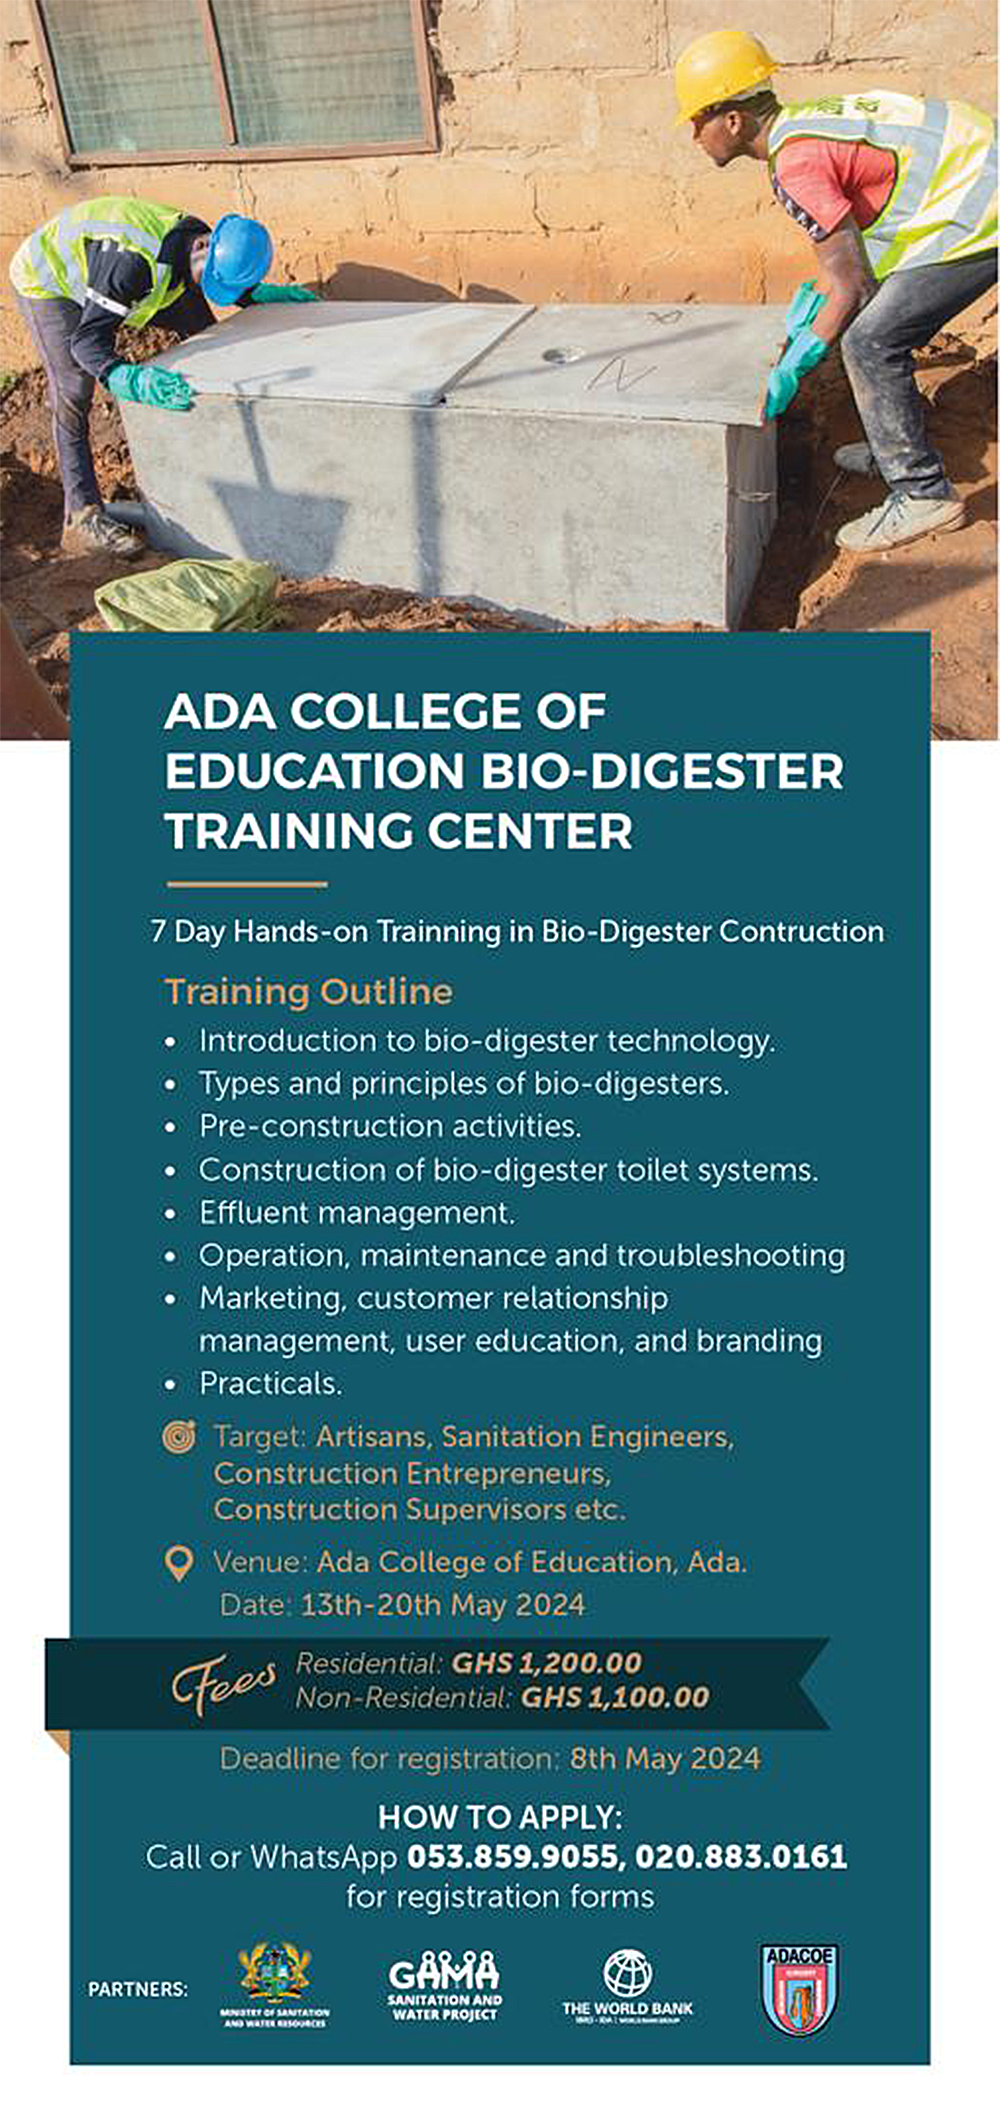 ADA COLLEGE OF EDUCATION BIO-DIGESTER TRAINING CENTER